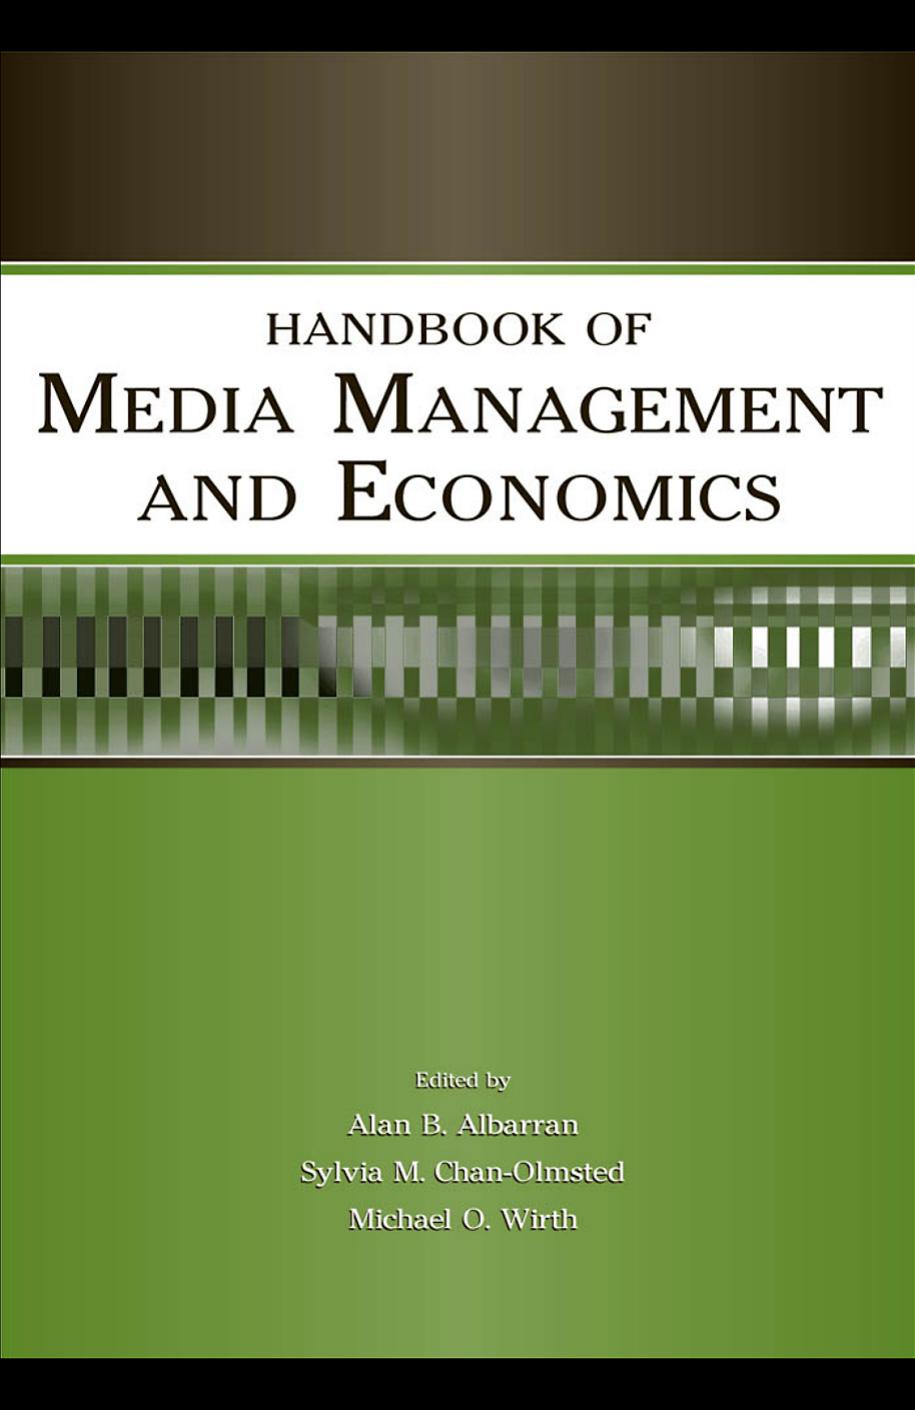 HANDBOOK OF MEDIA MANAGEMENT AND ECONOMICS